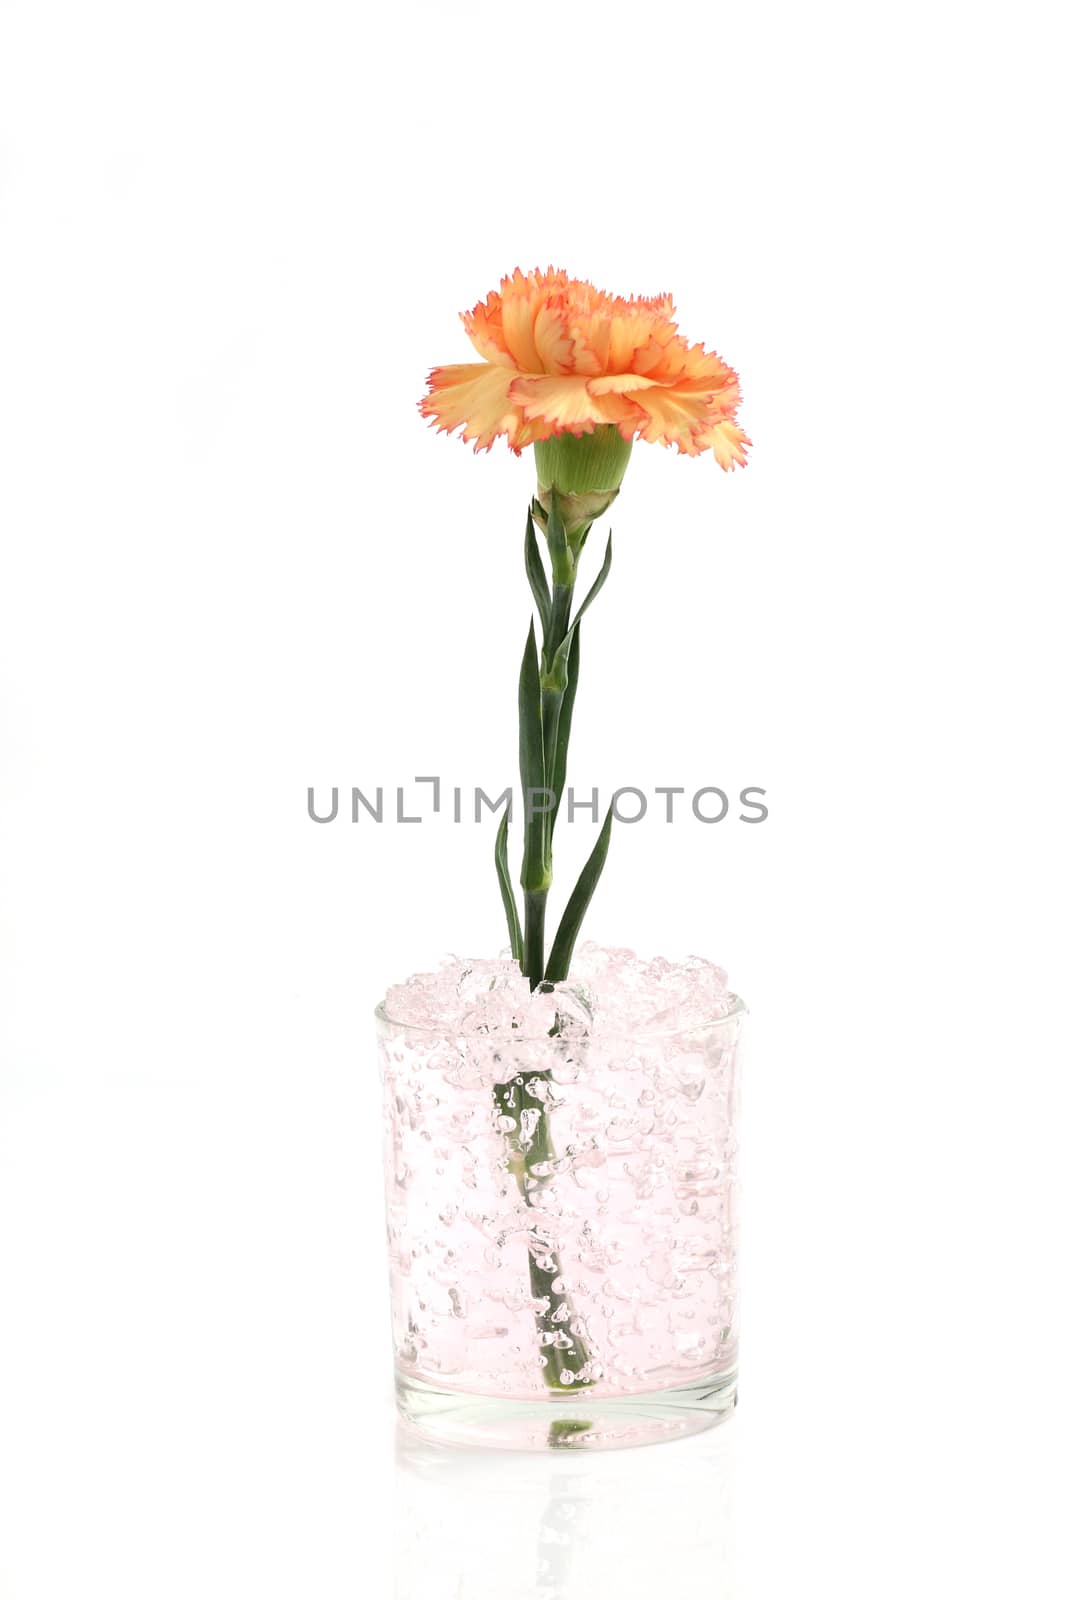 orange flower isolated in white background by piyato